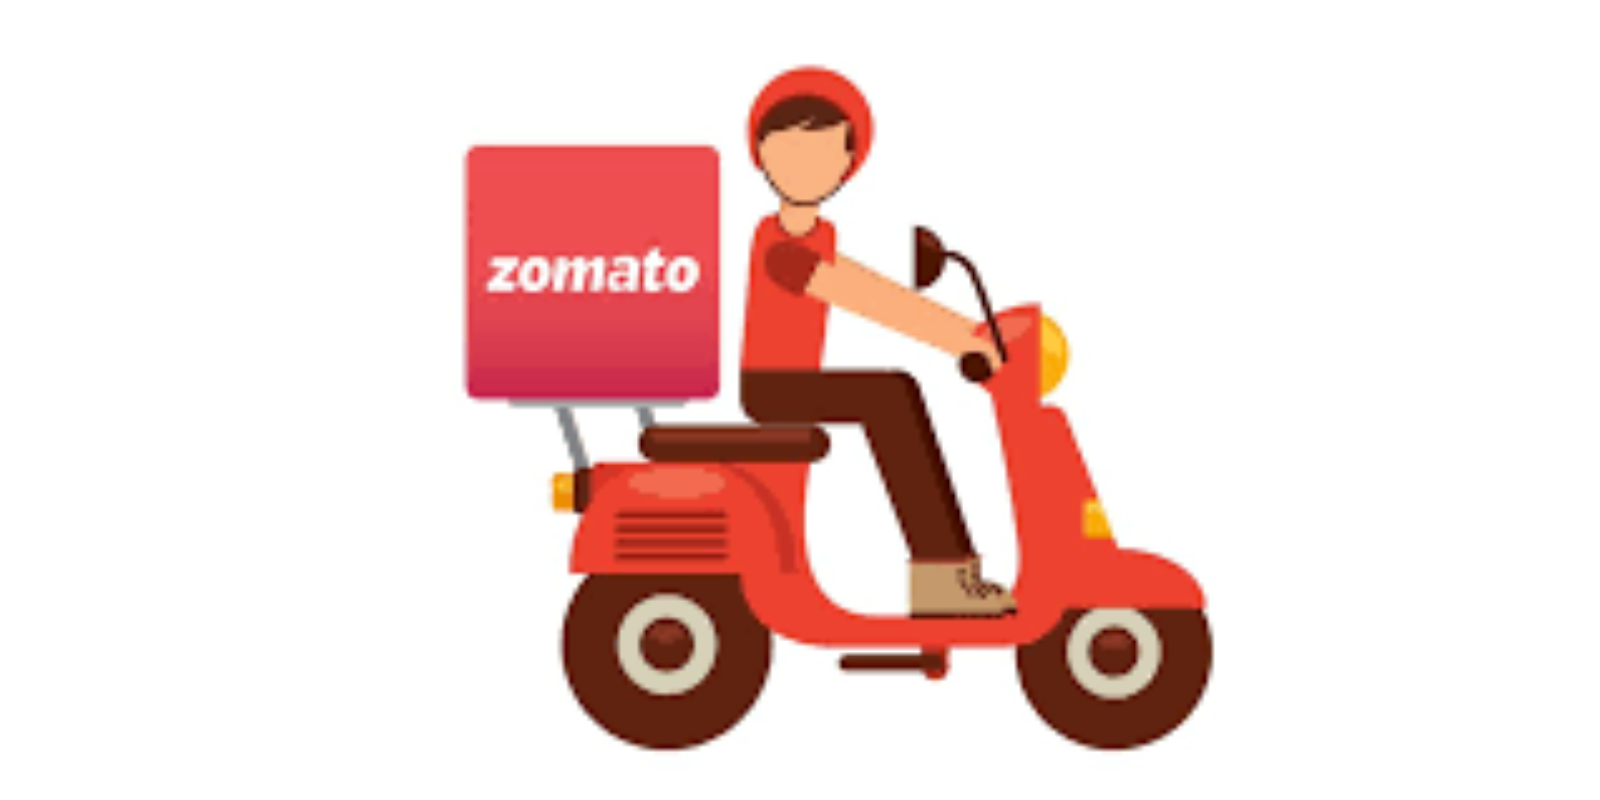 Zomato Digital Marketing Strategy In Nutshell